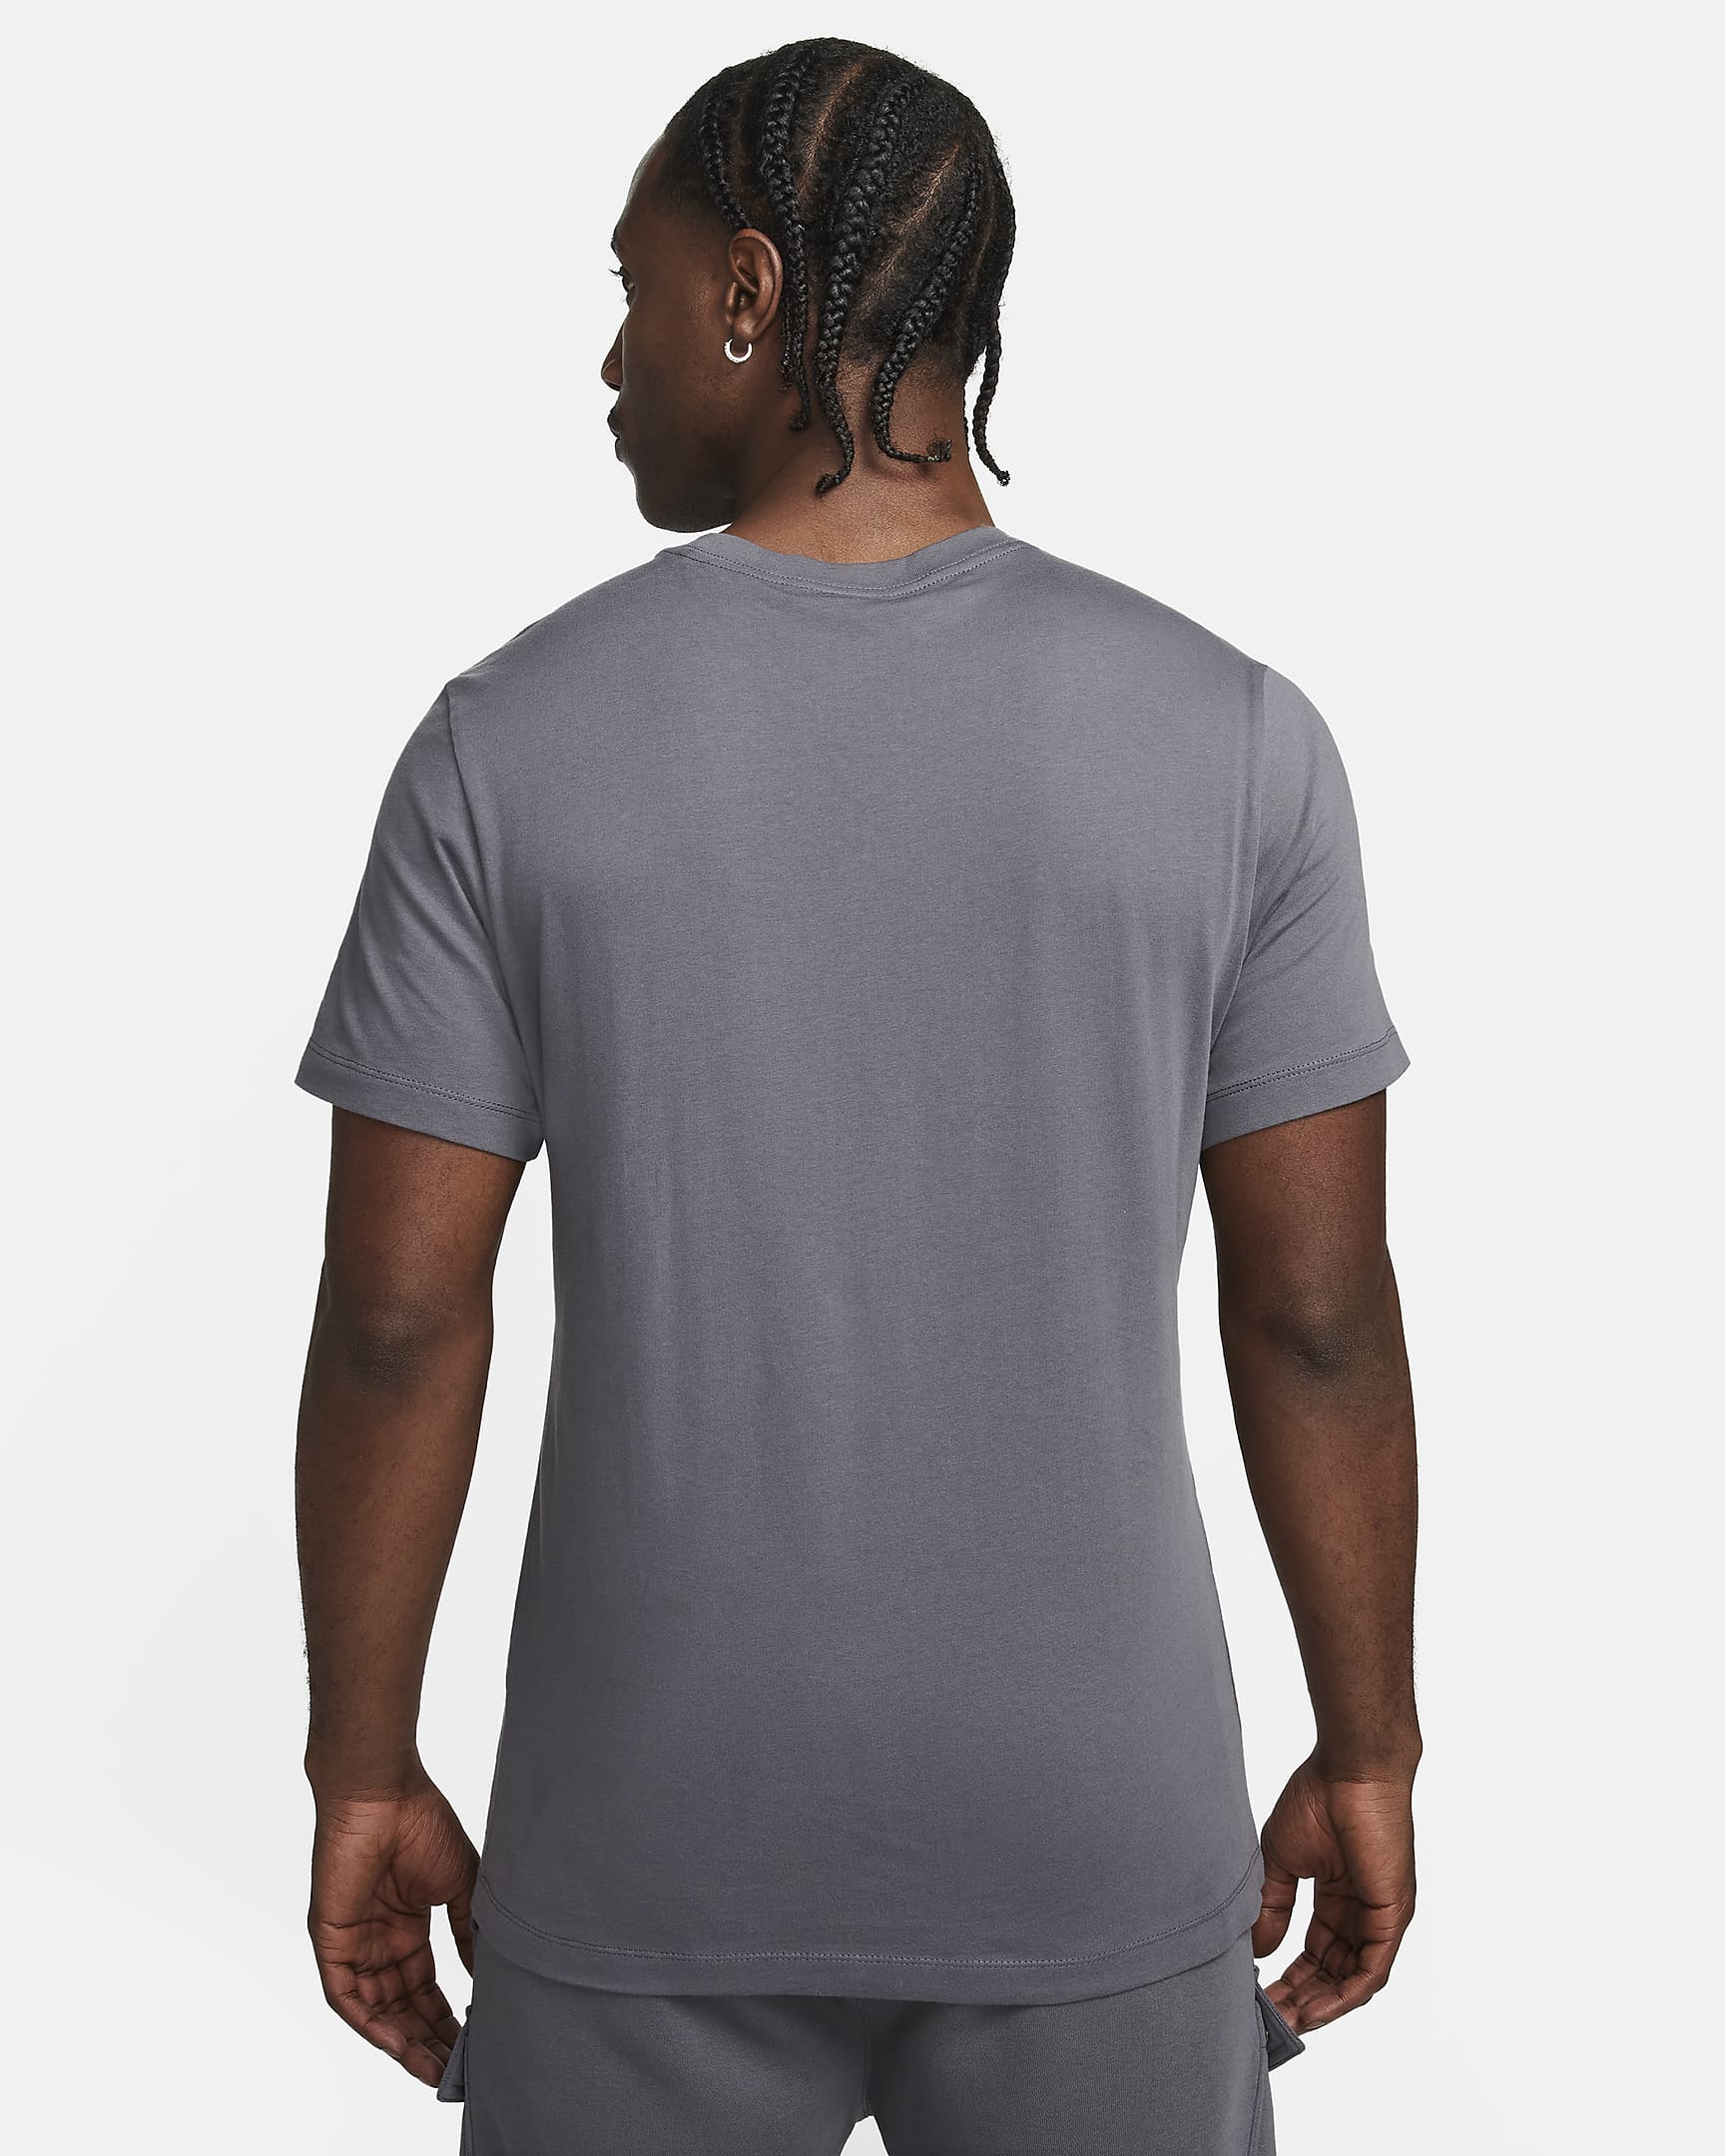 Nike Sportswear Men's Graphic T-Shirt. Nike SK